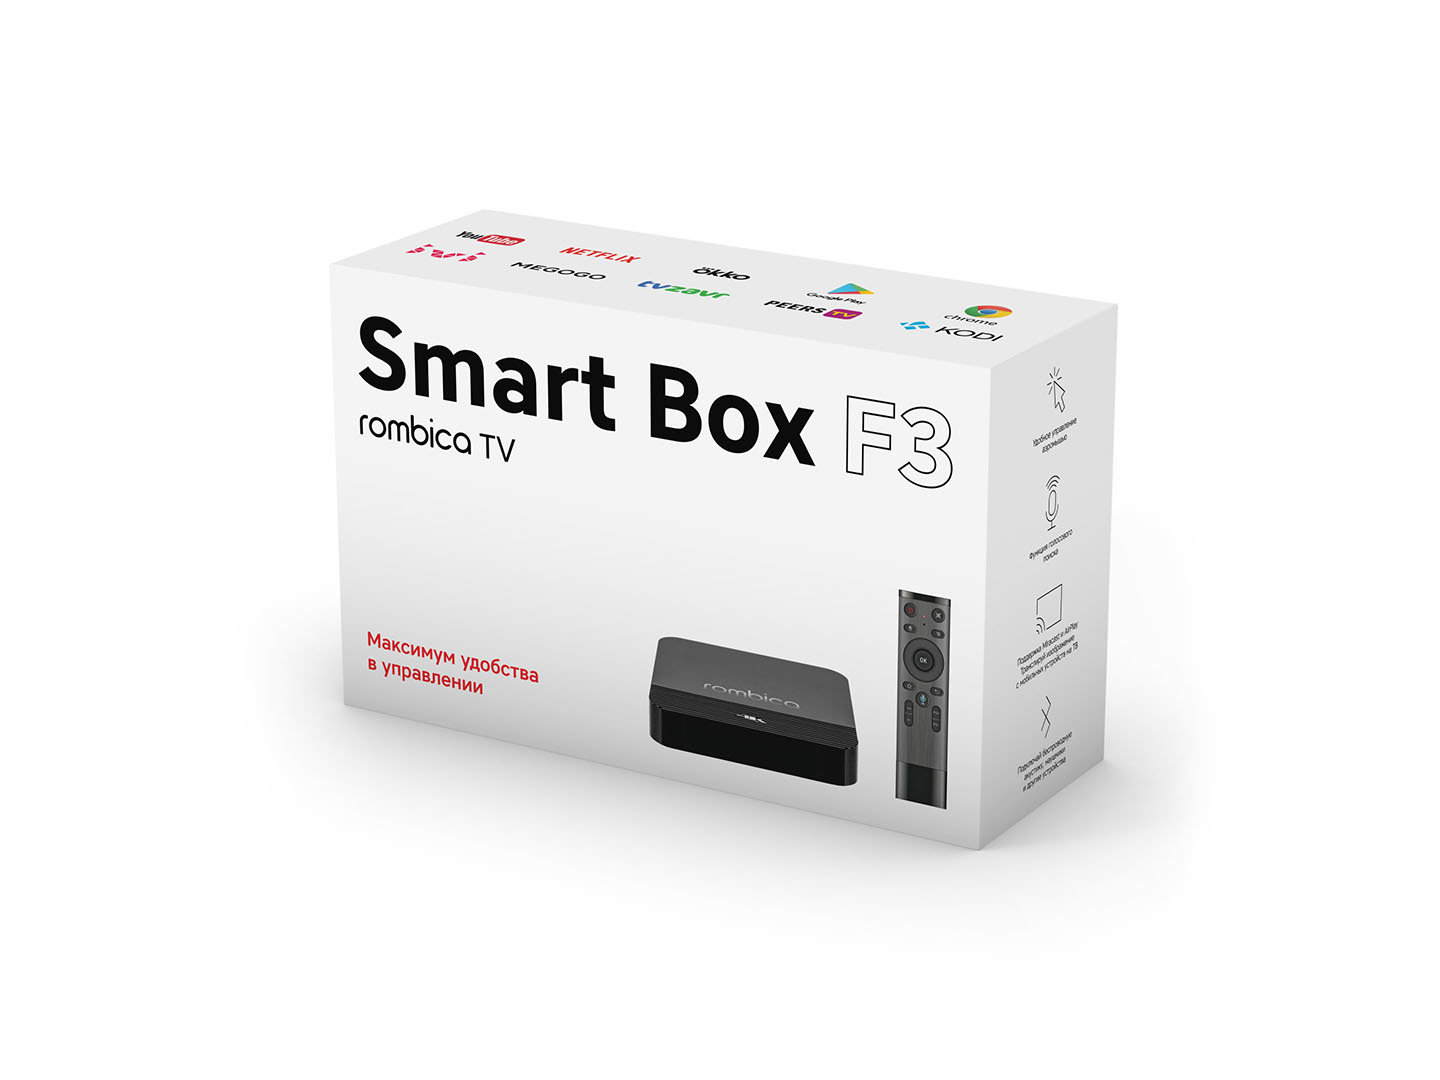 Smart Box F3 - 